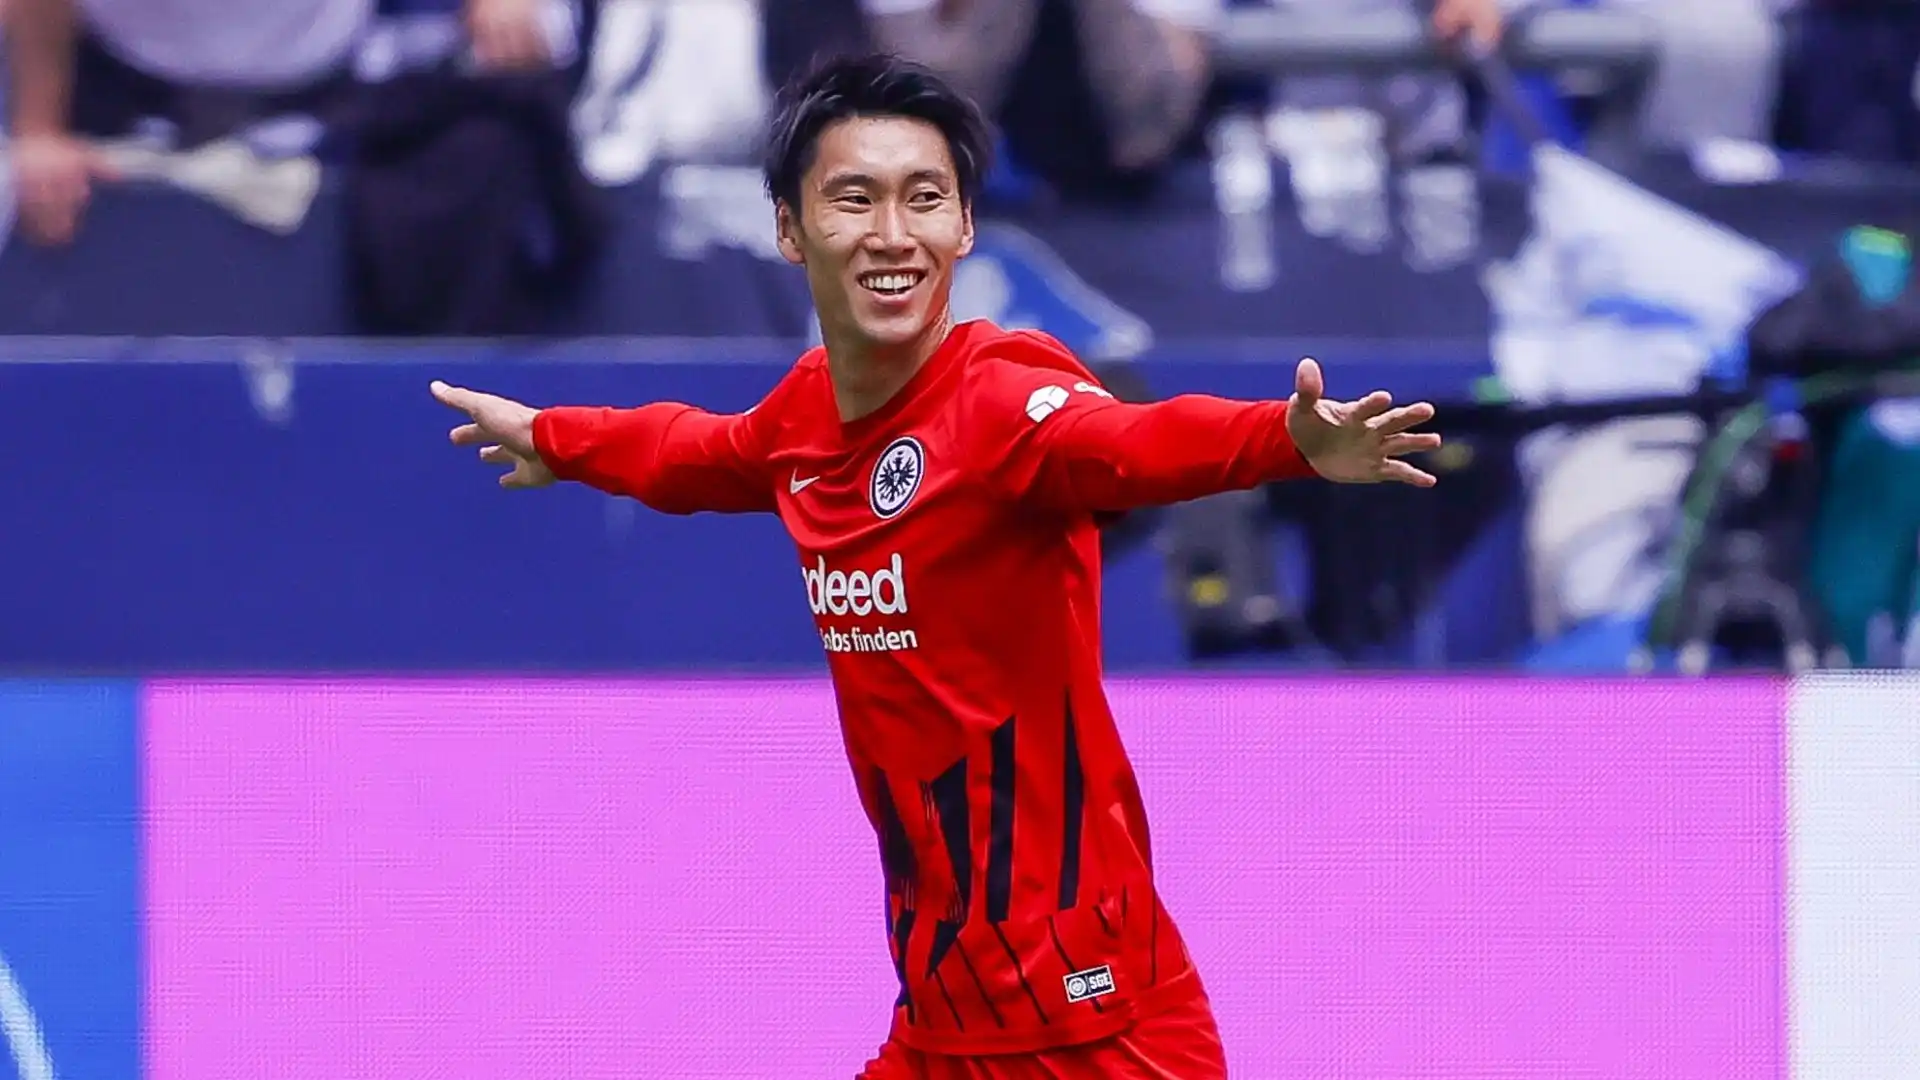 Daichi Kamada (Eintracht Francoforte, Giappone), età 26 anni